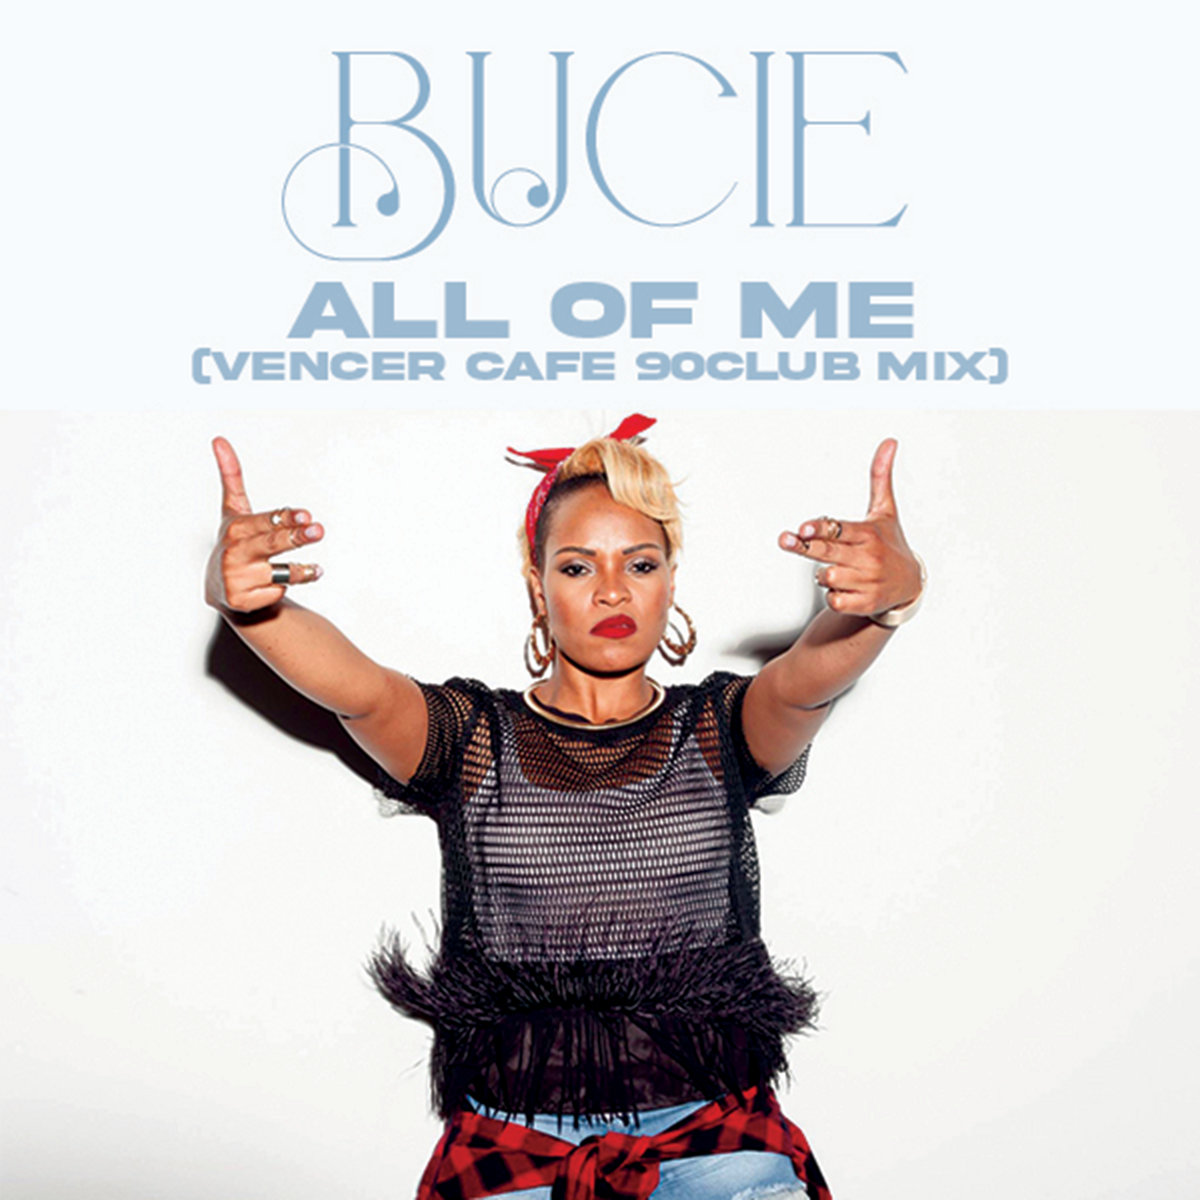 Bucie - All Of Me (Vencer Cafe 90club Mix) (Bootleg)